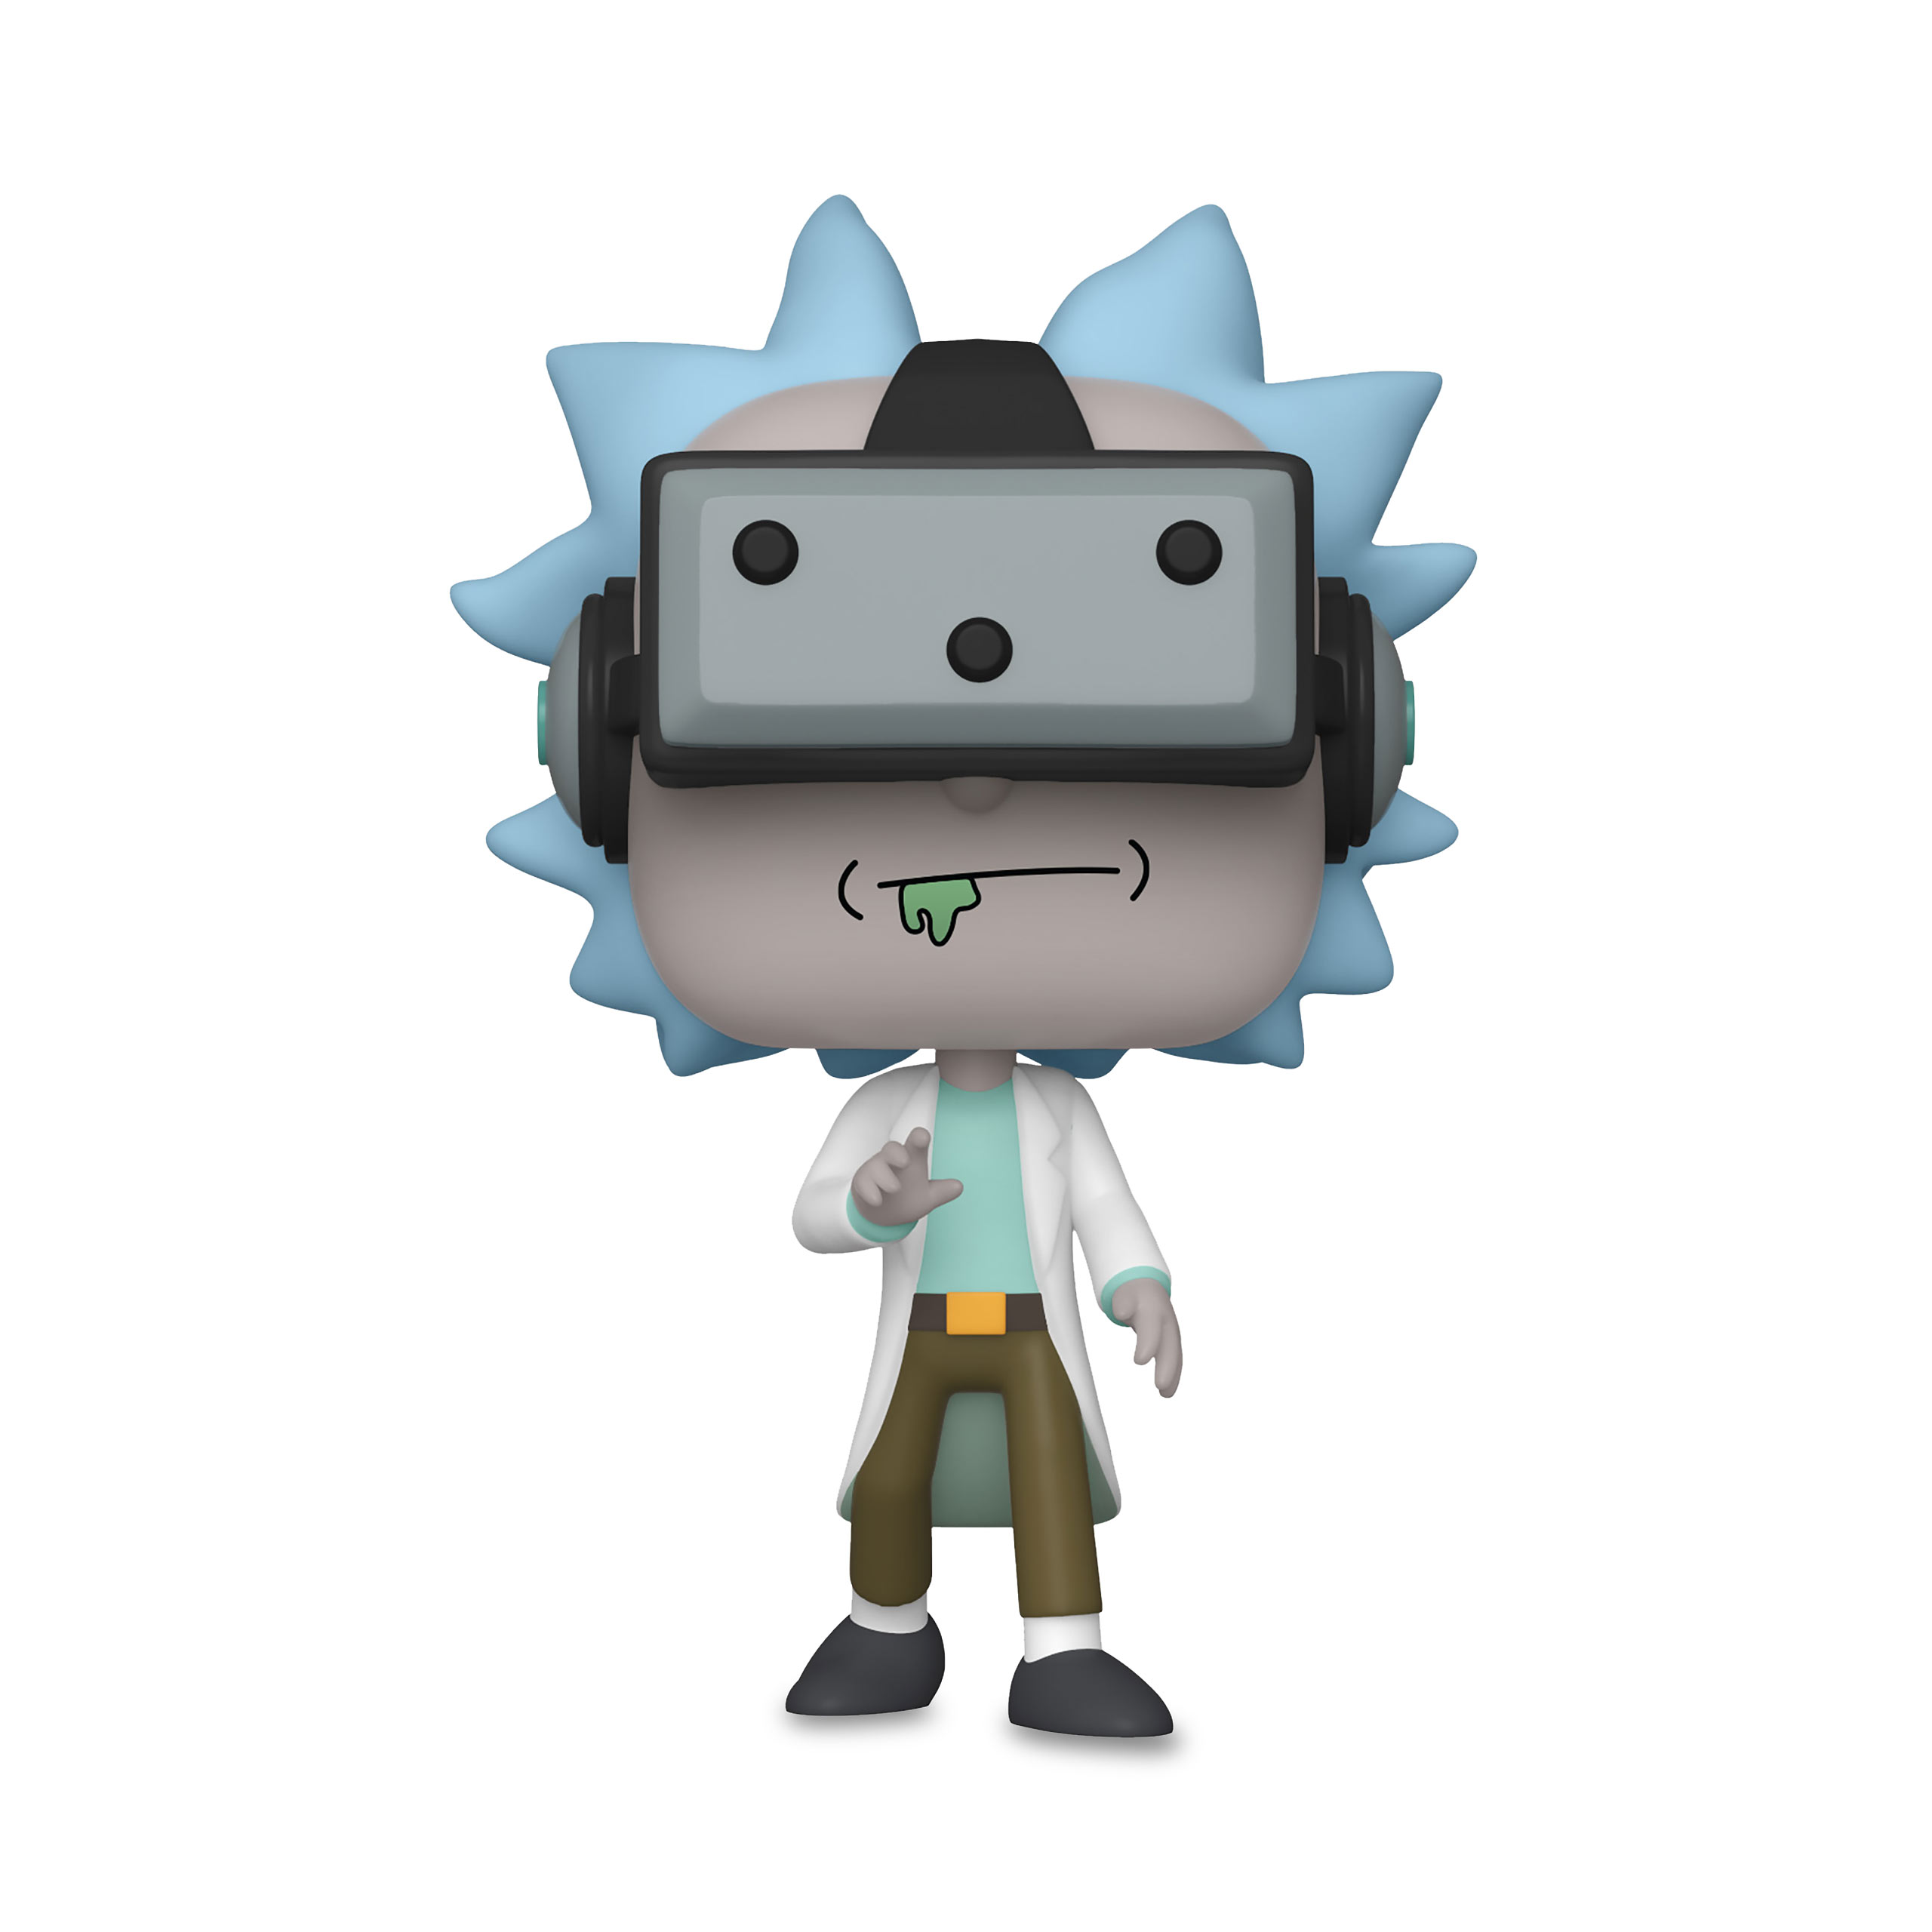 Rick and Morty - Gamer Rick Funko Pop Figur